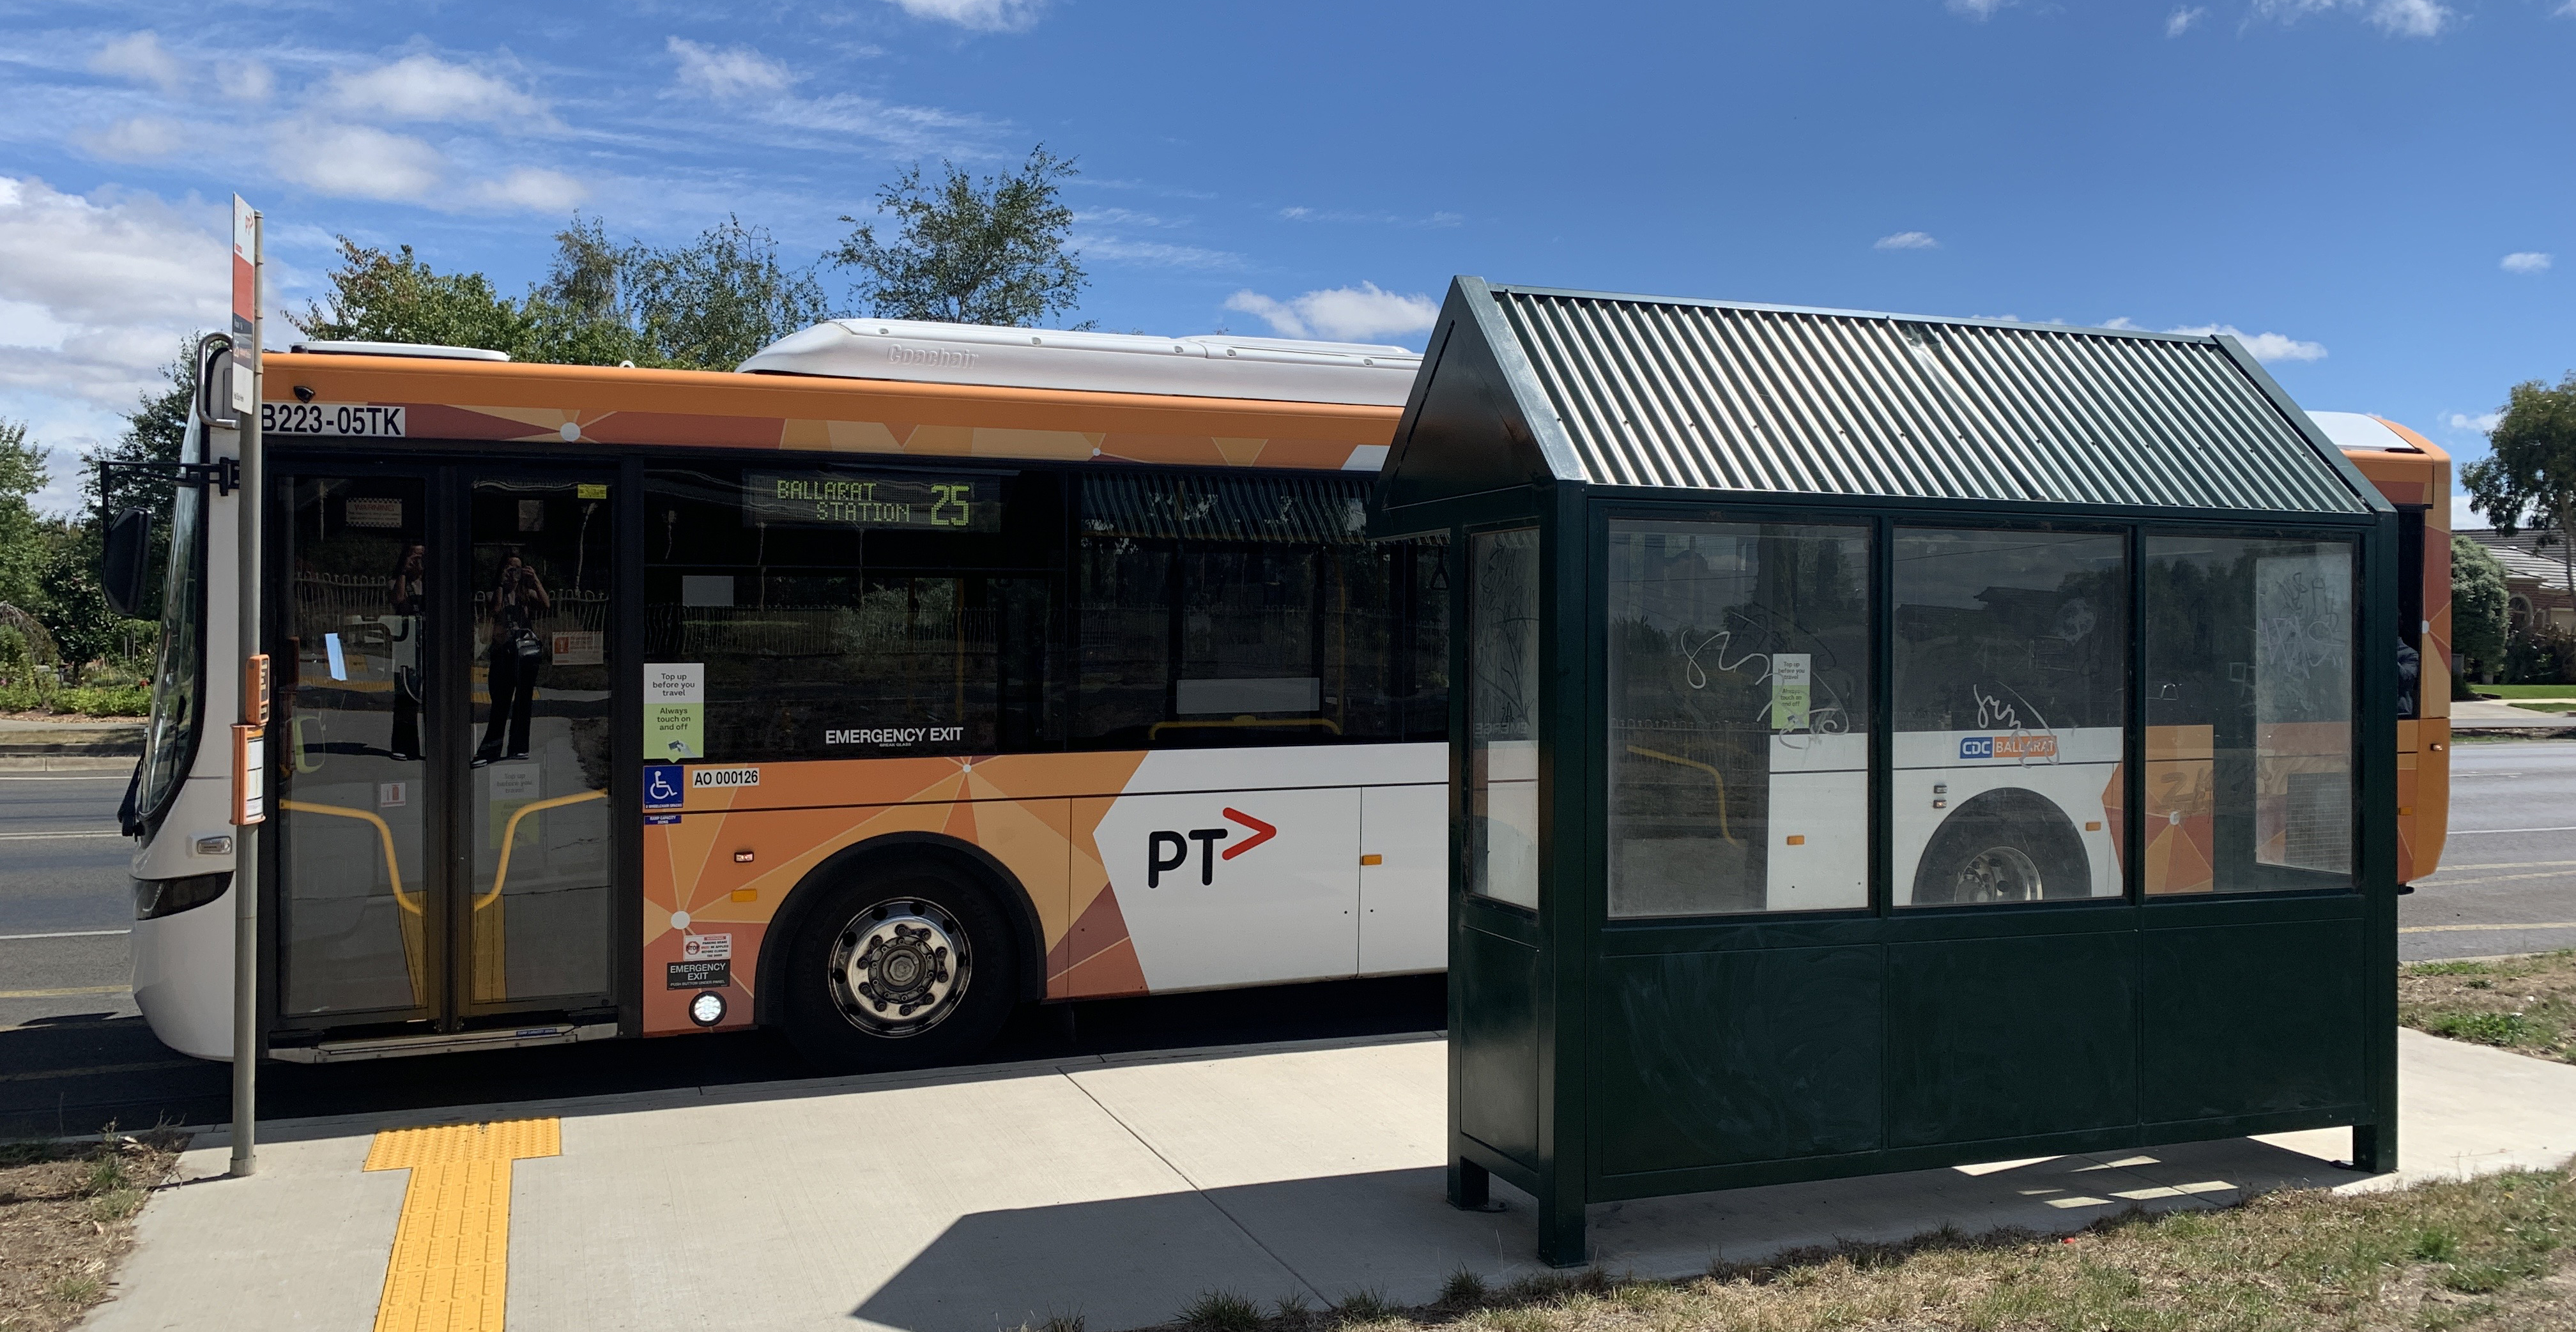 Ballarat bus stopped at shelter